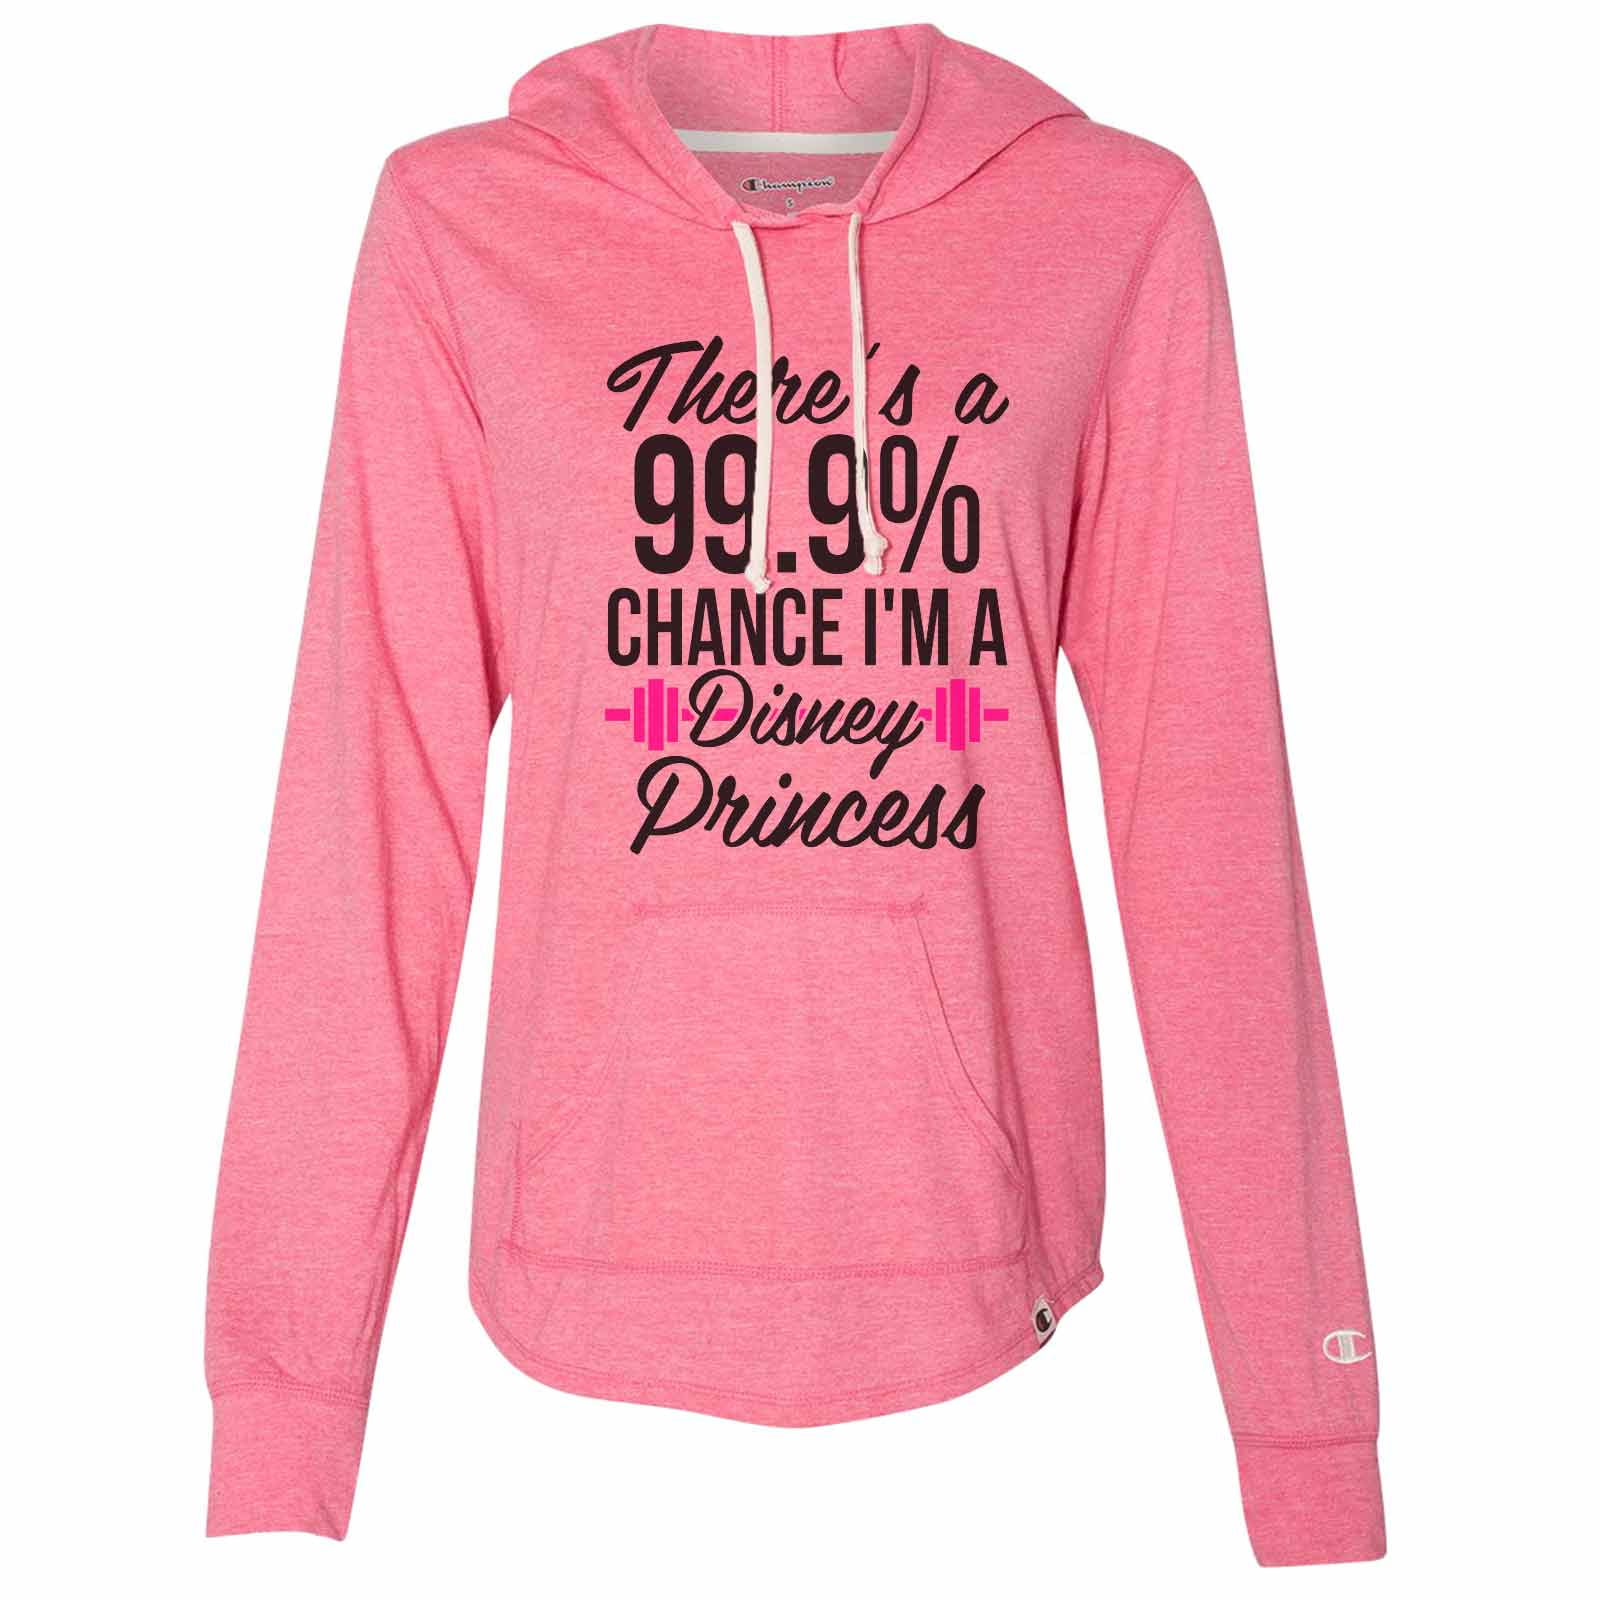 pink champion hoodie womens